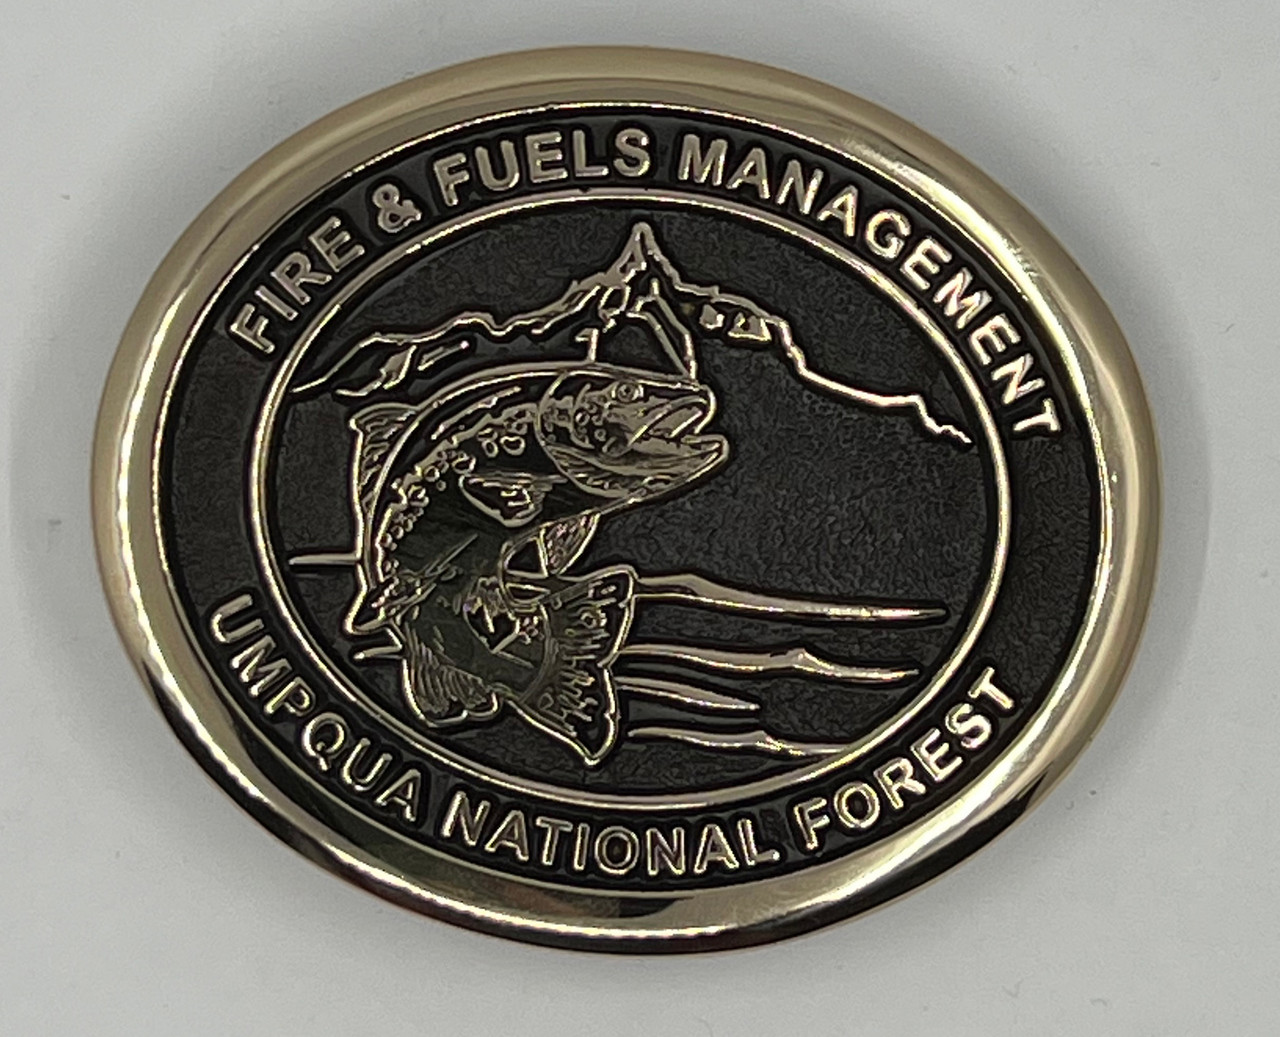 Fire & Fuels Management Umpqua National Forest Buckle (RESTRICTED)